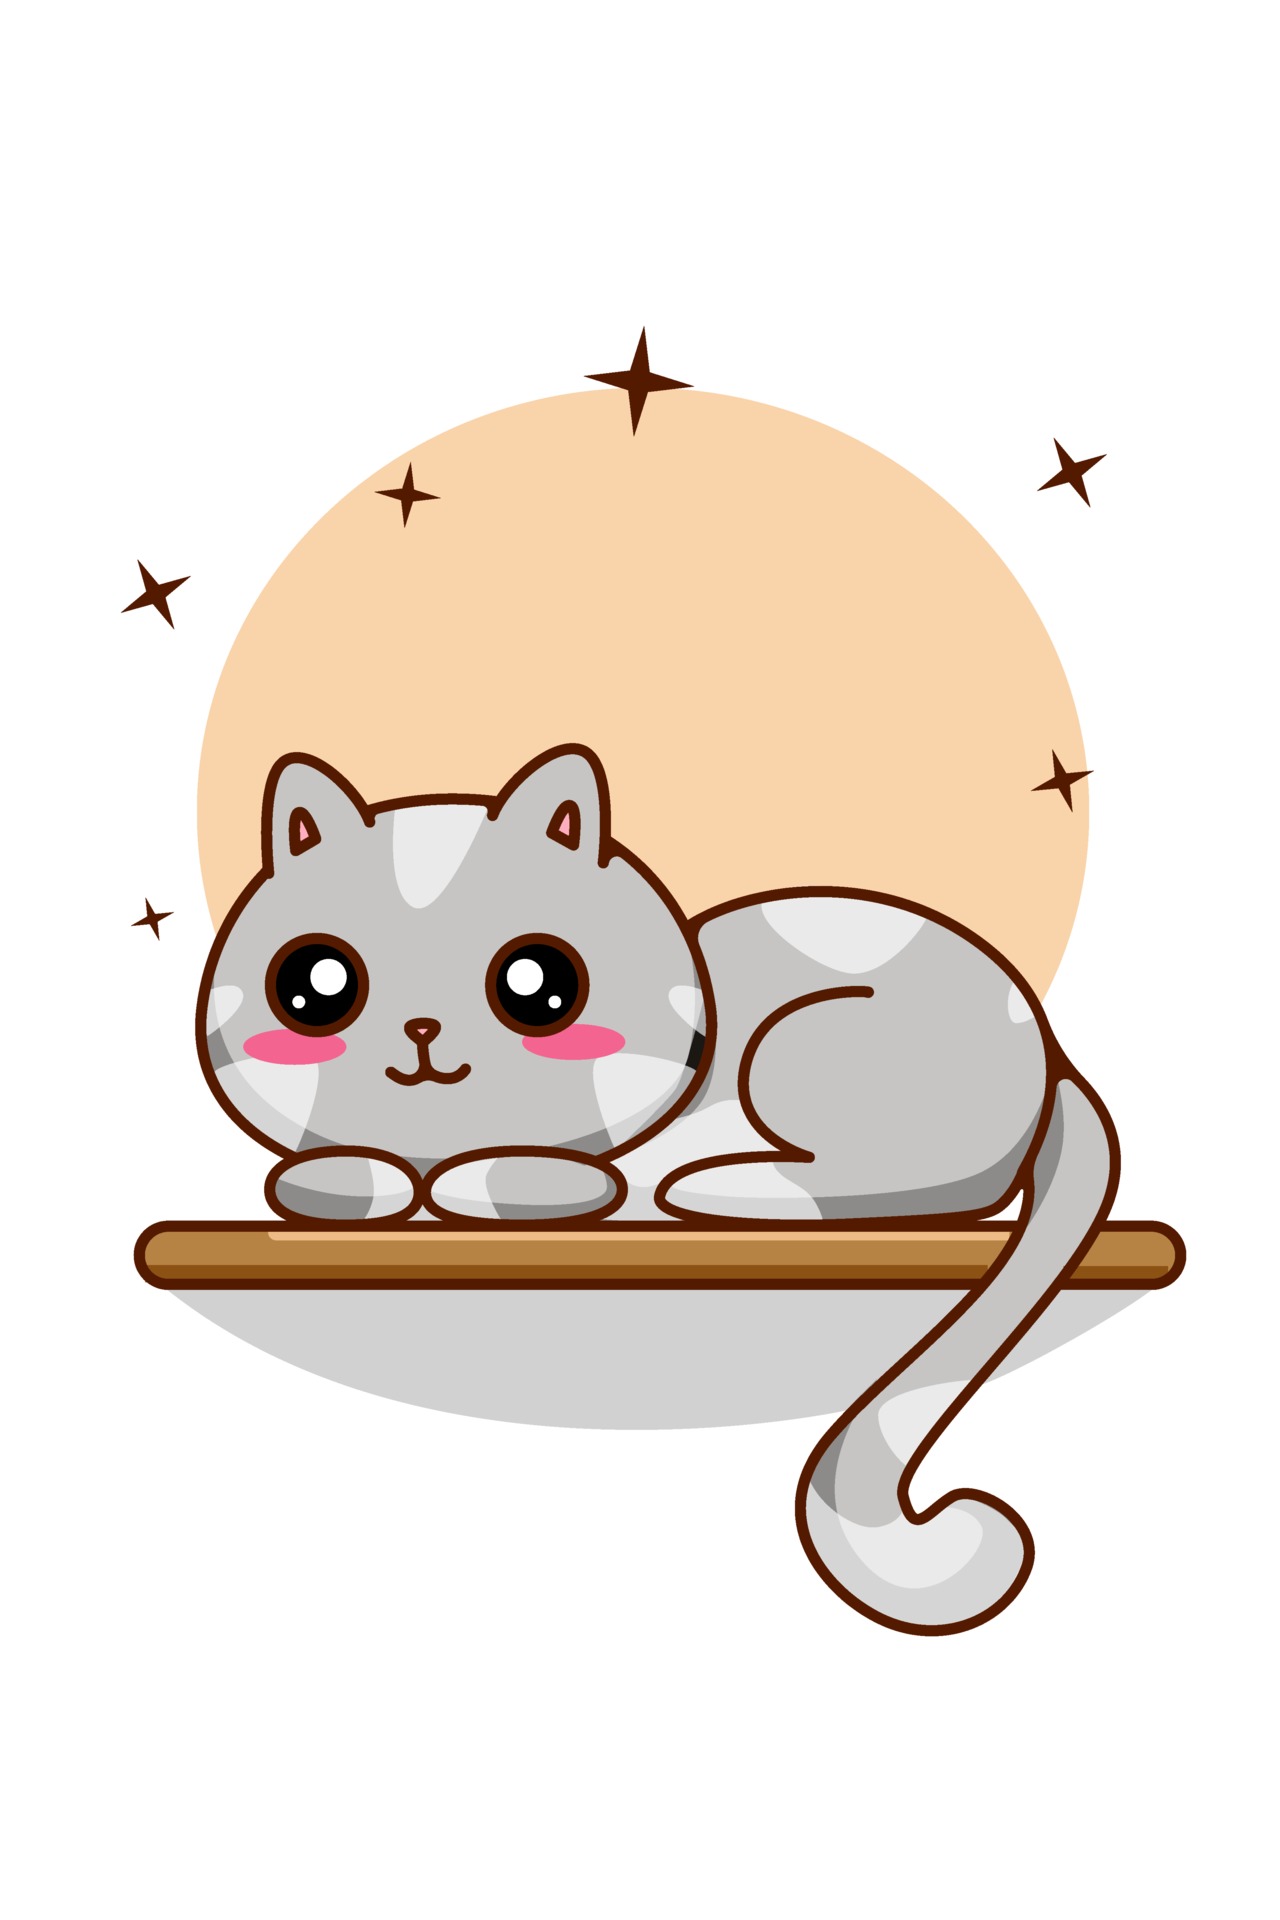 Cute and funny cat cartoon illustration 2947508 Vector Art at Vecteezy